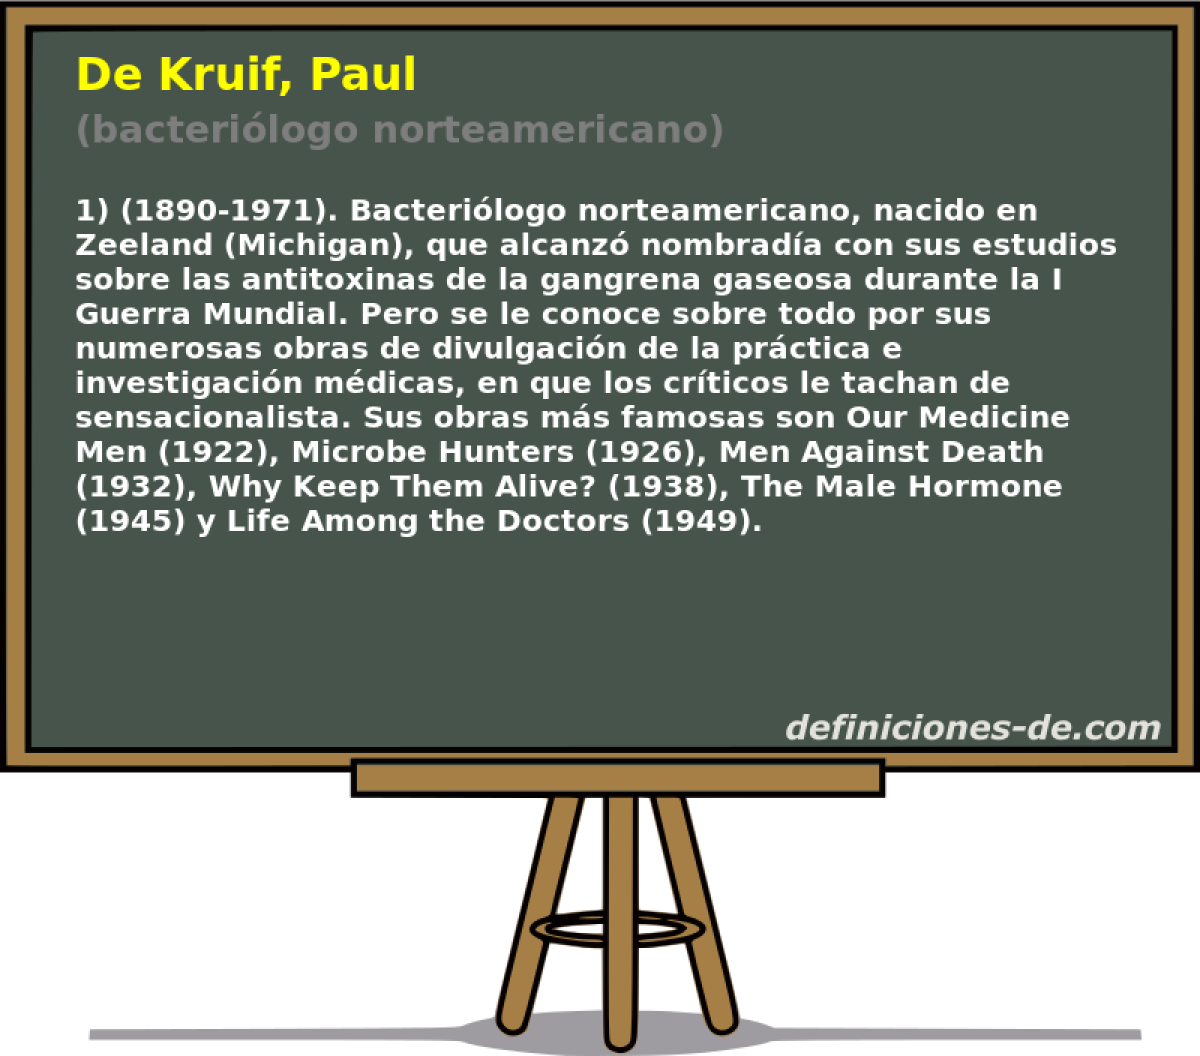 De Kruif, Paul (bacterilogo norteamericano)